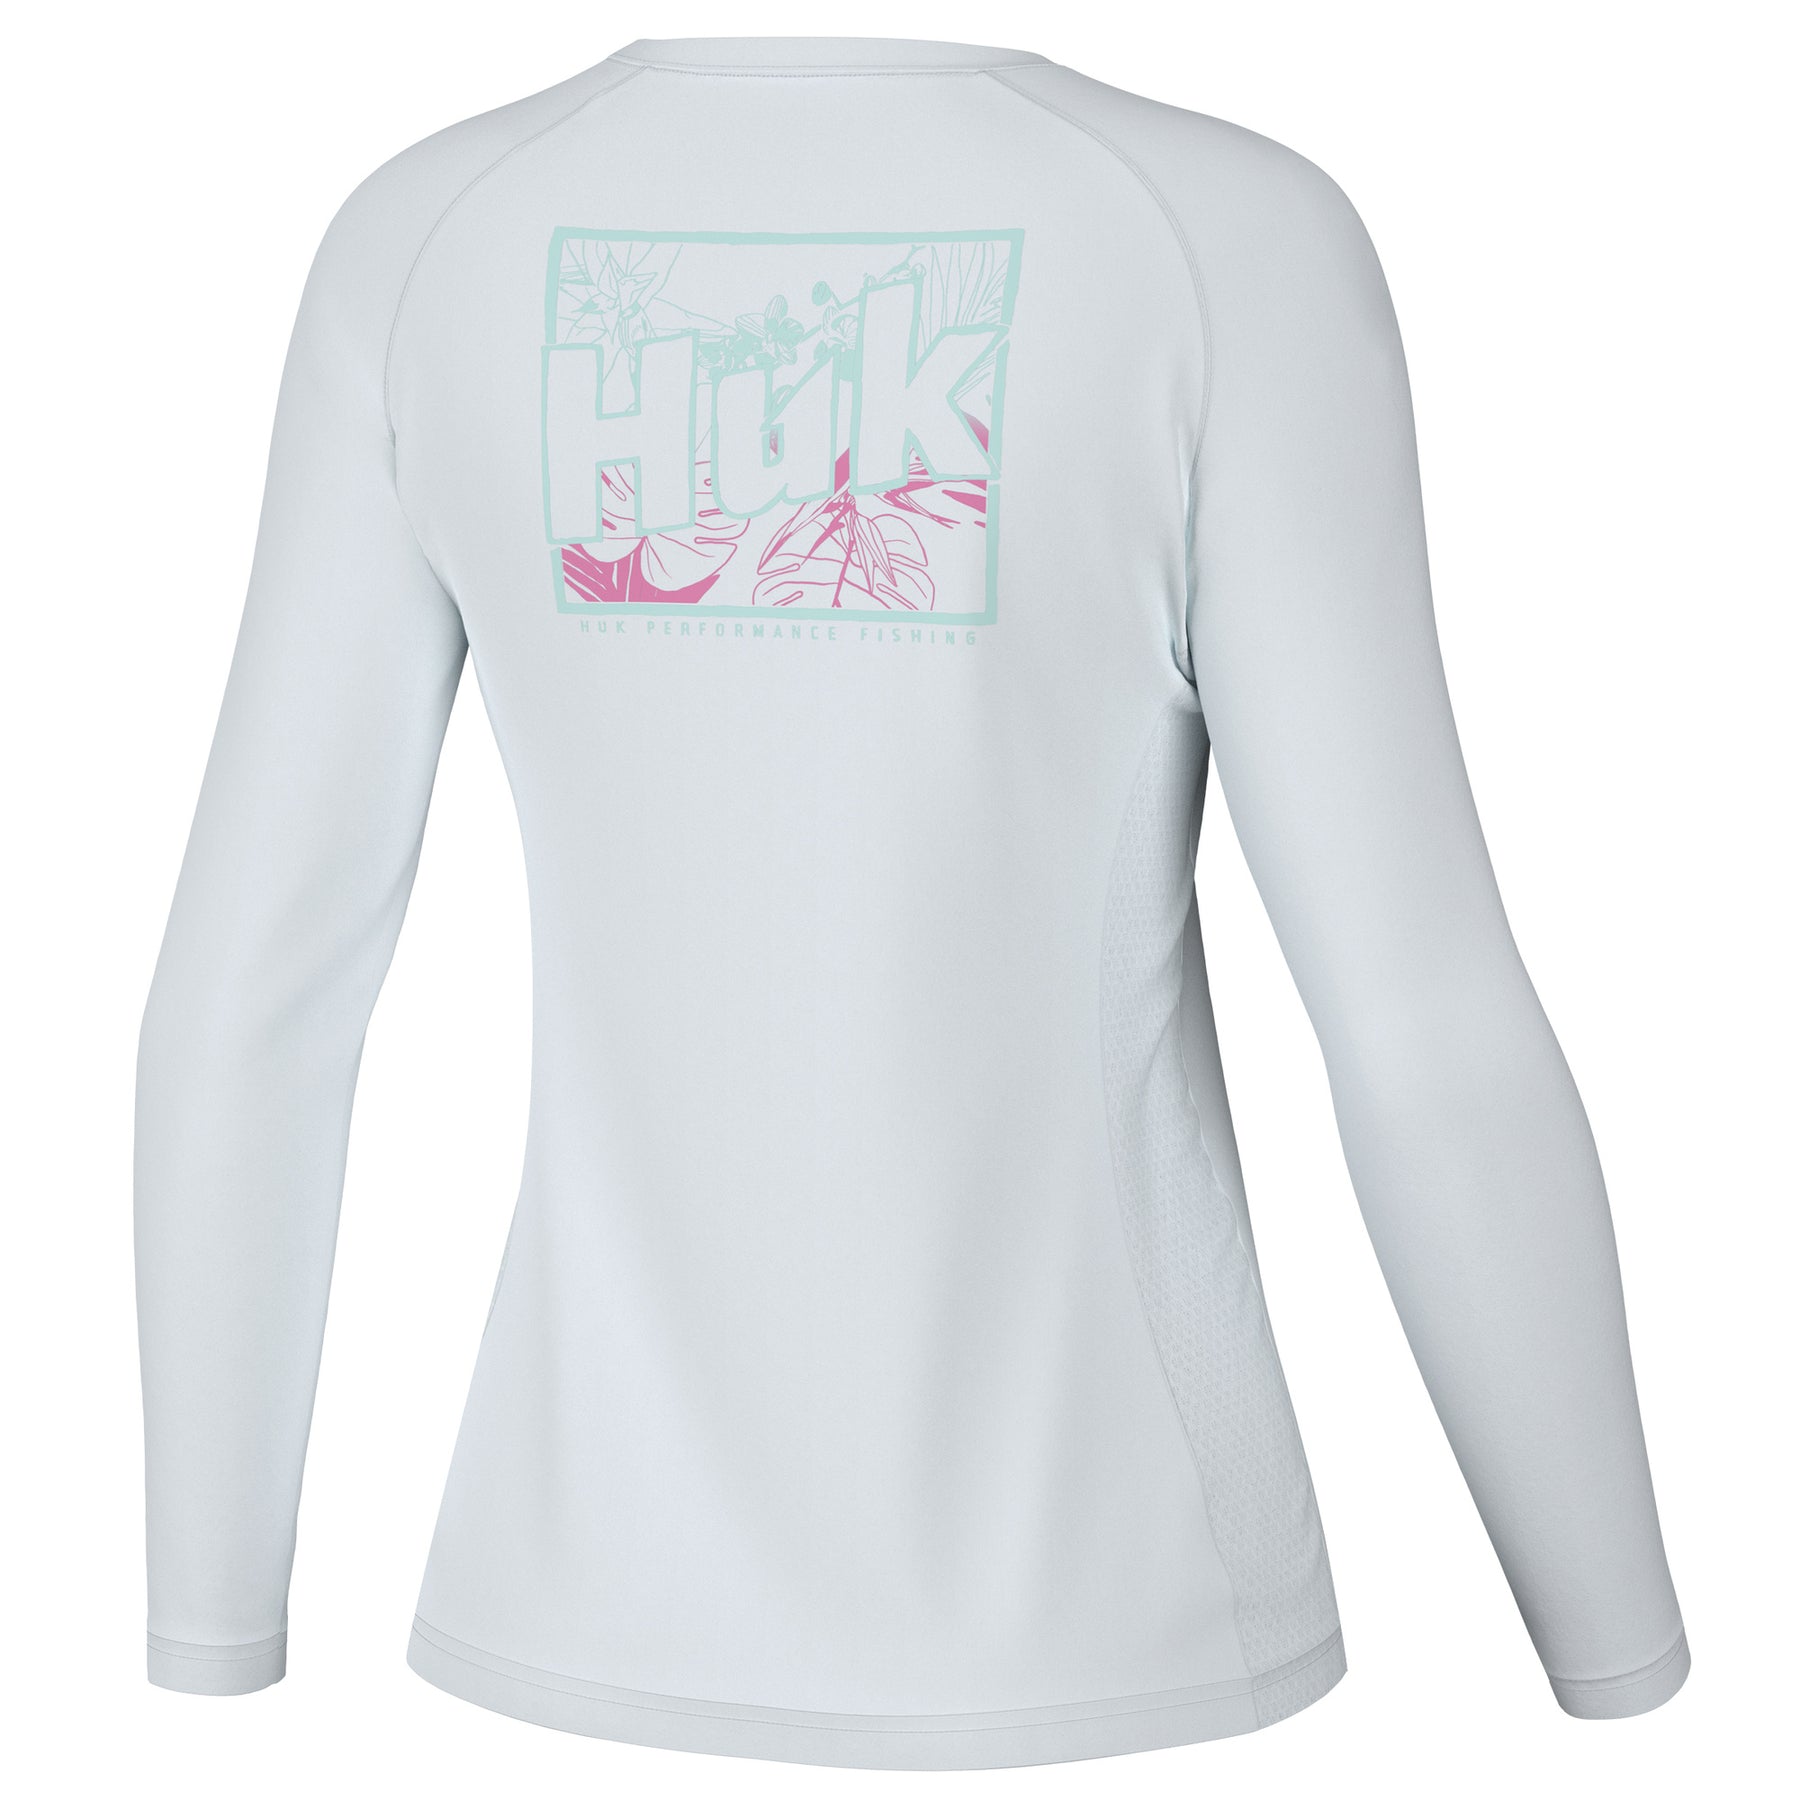 Huk Womens Tropic Pursuit Performance Shirt